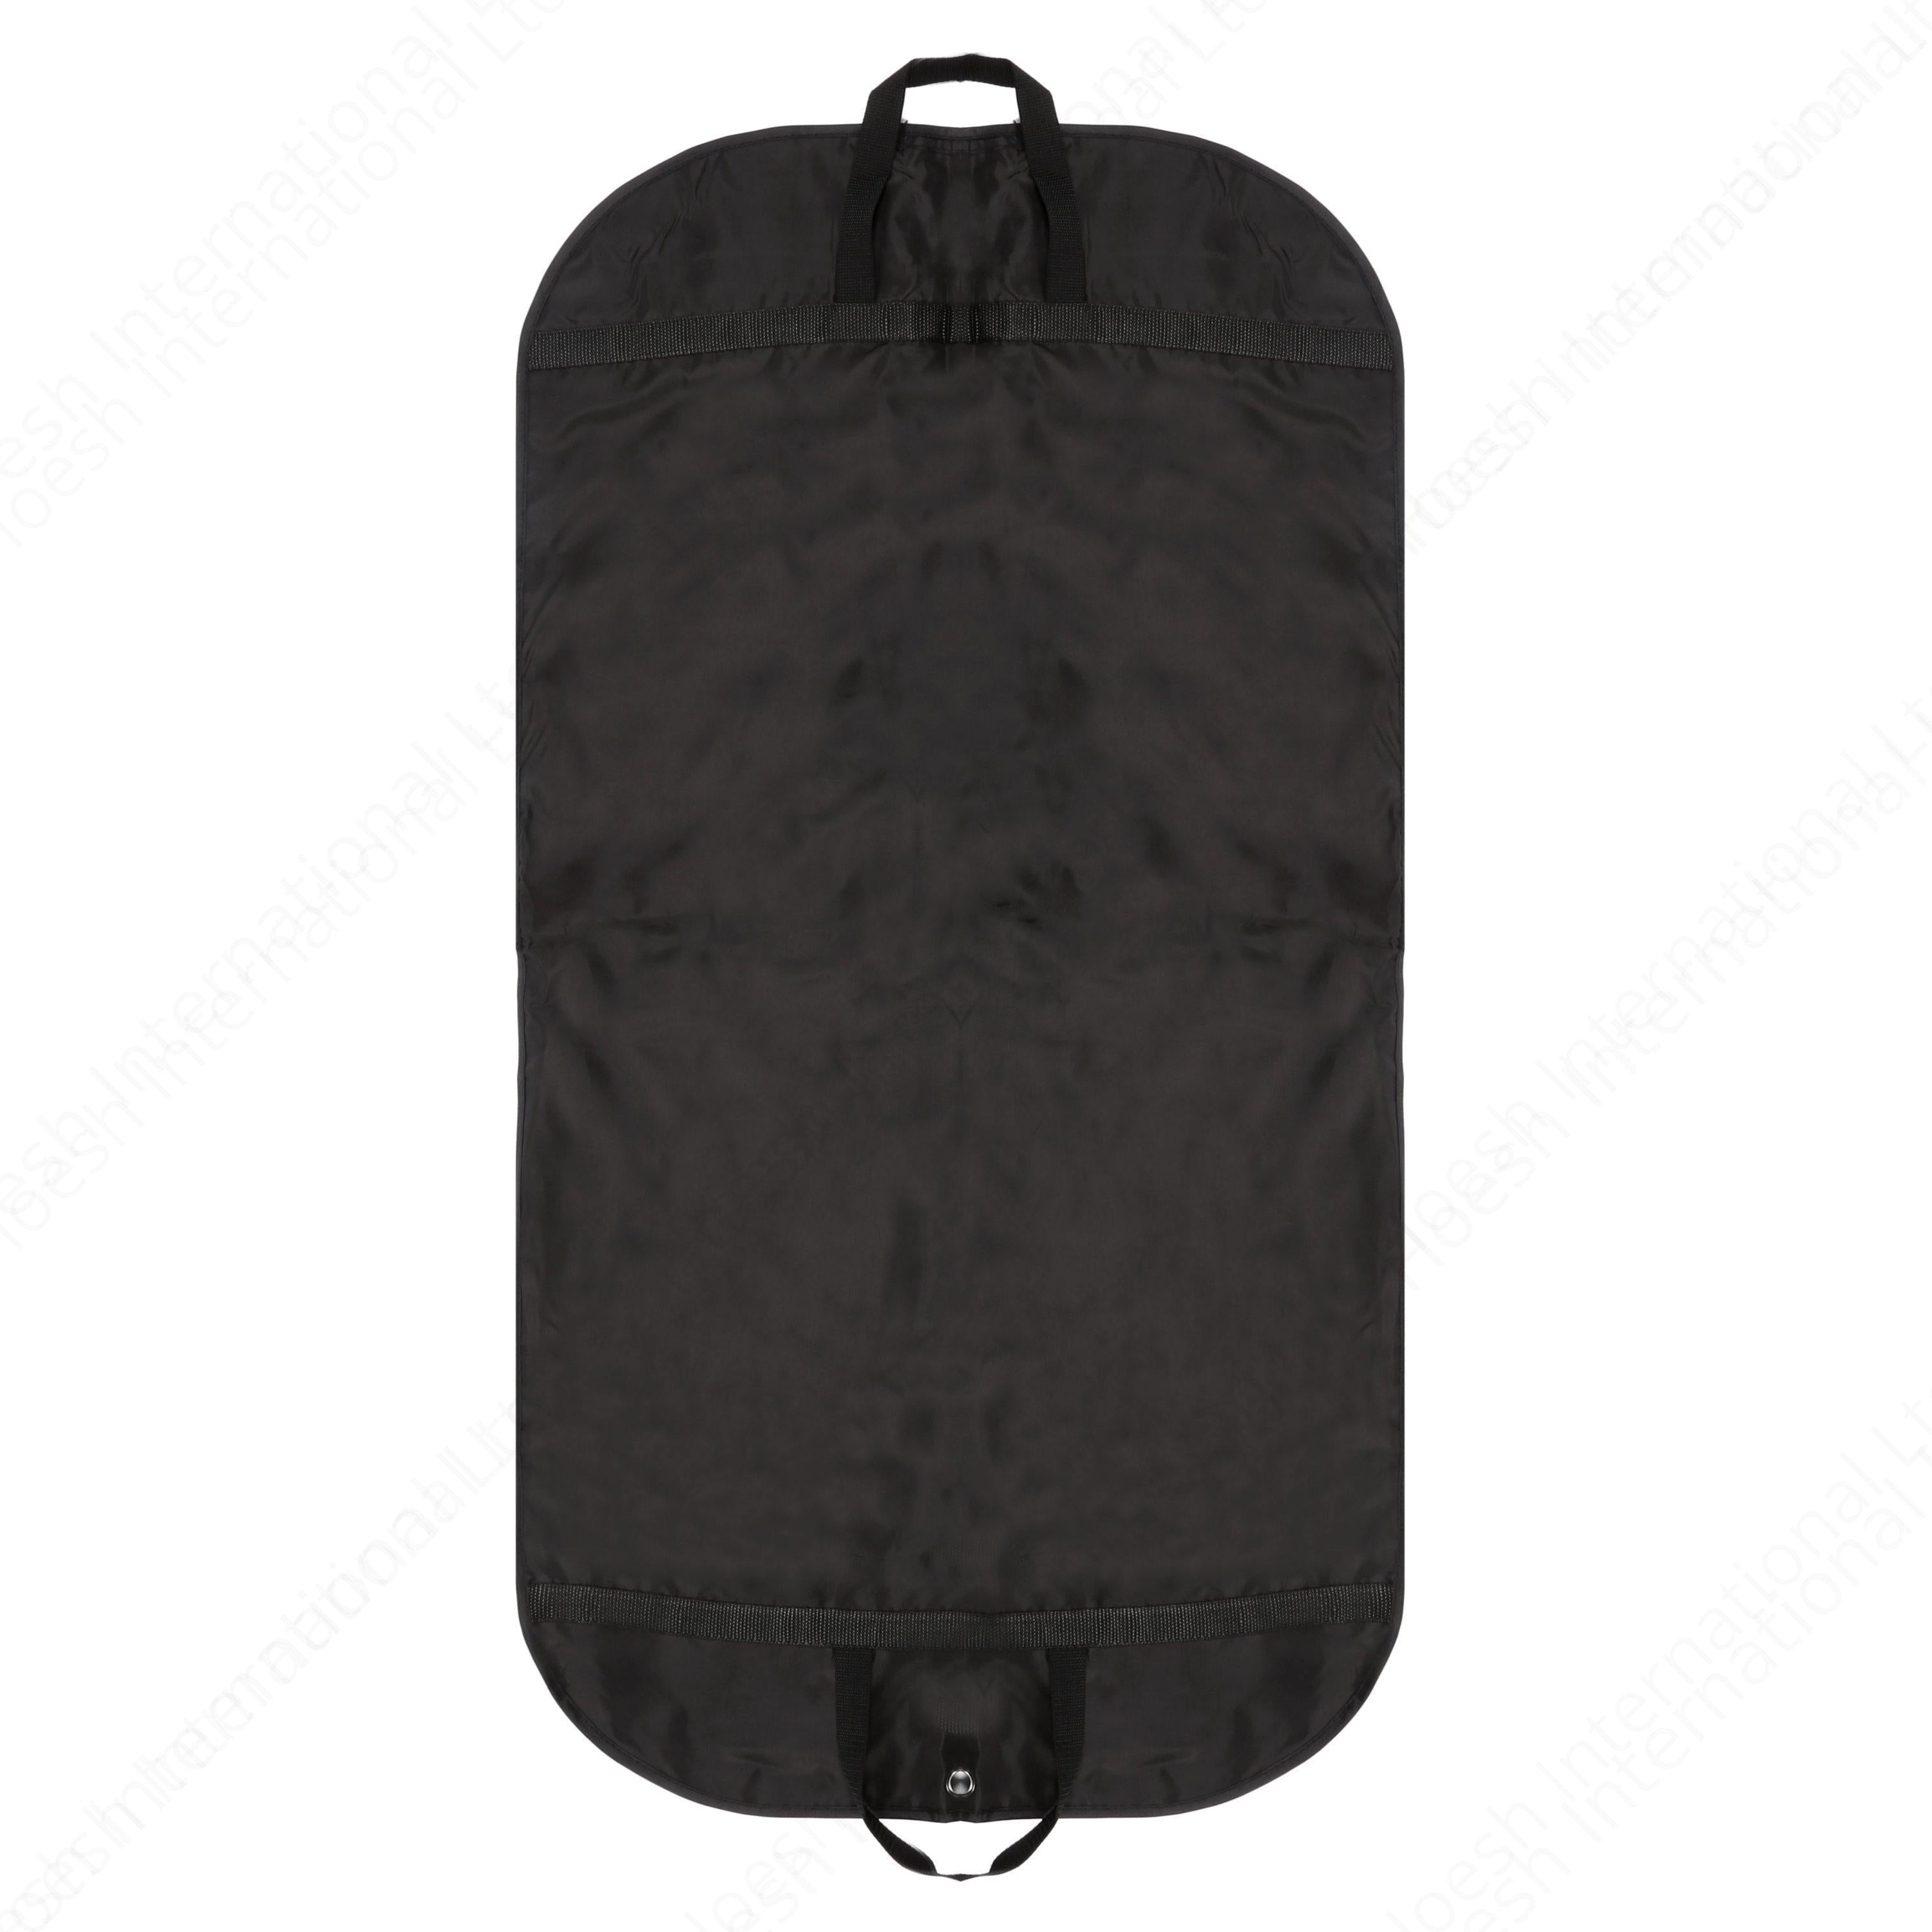 44” Nylon Suit Travel Carrier With Webbing Handles - Hoesh International Ltd